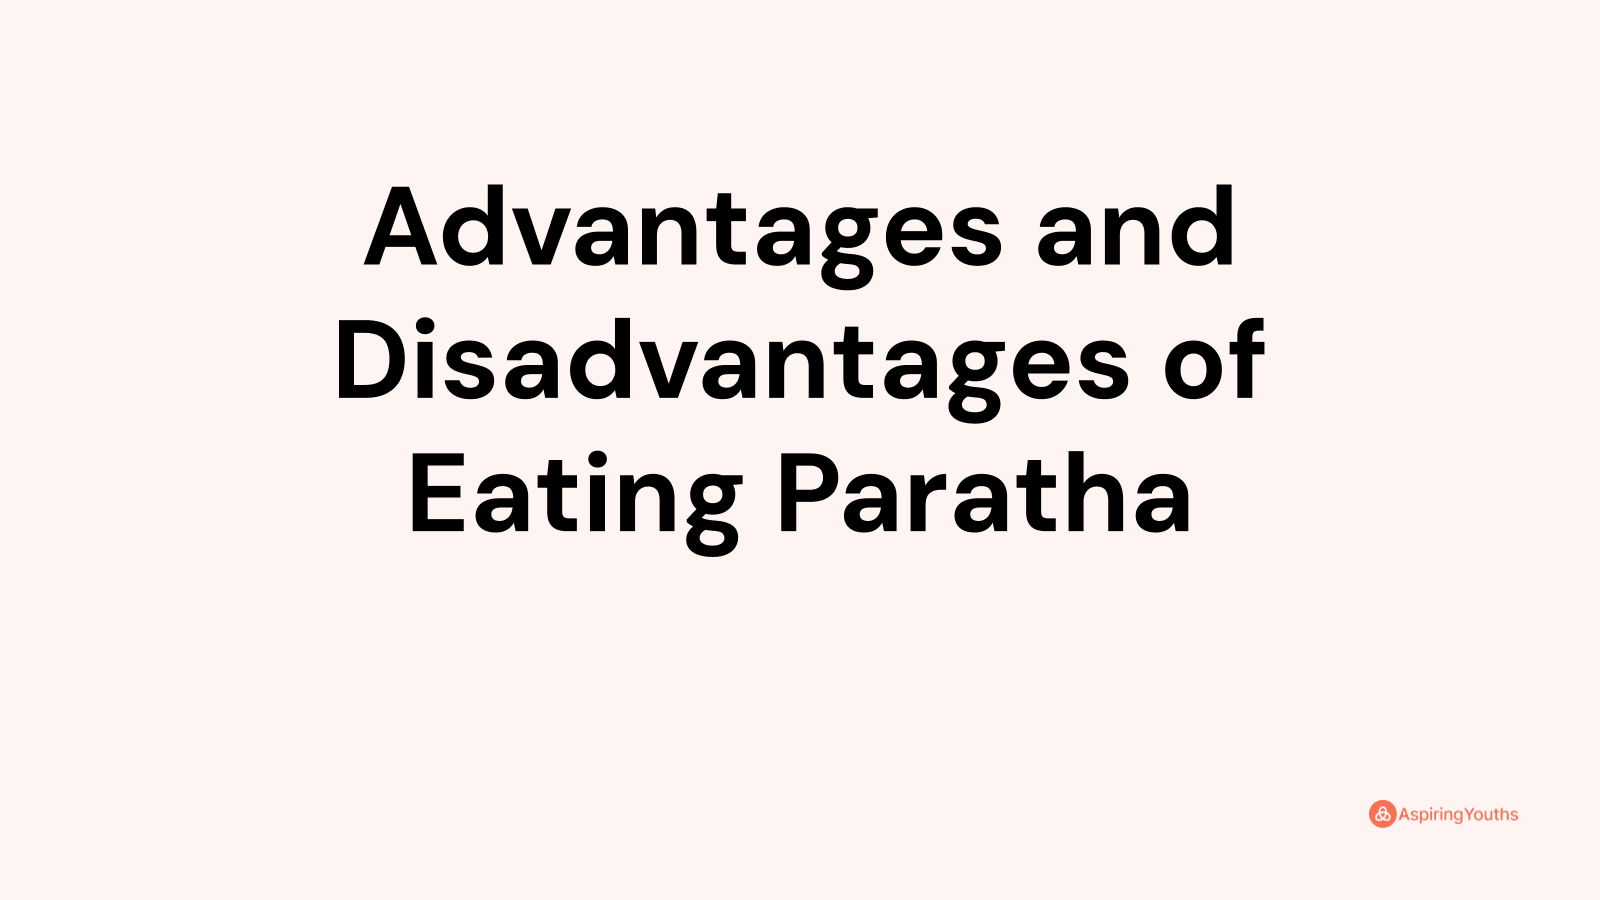 Advantages and disadvantages of Eating Paratha